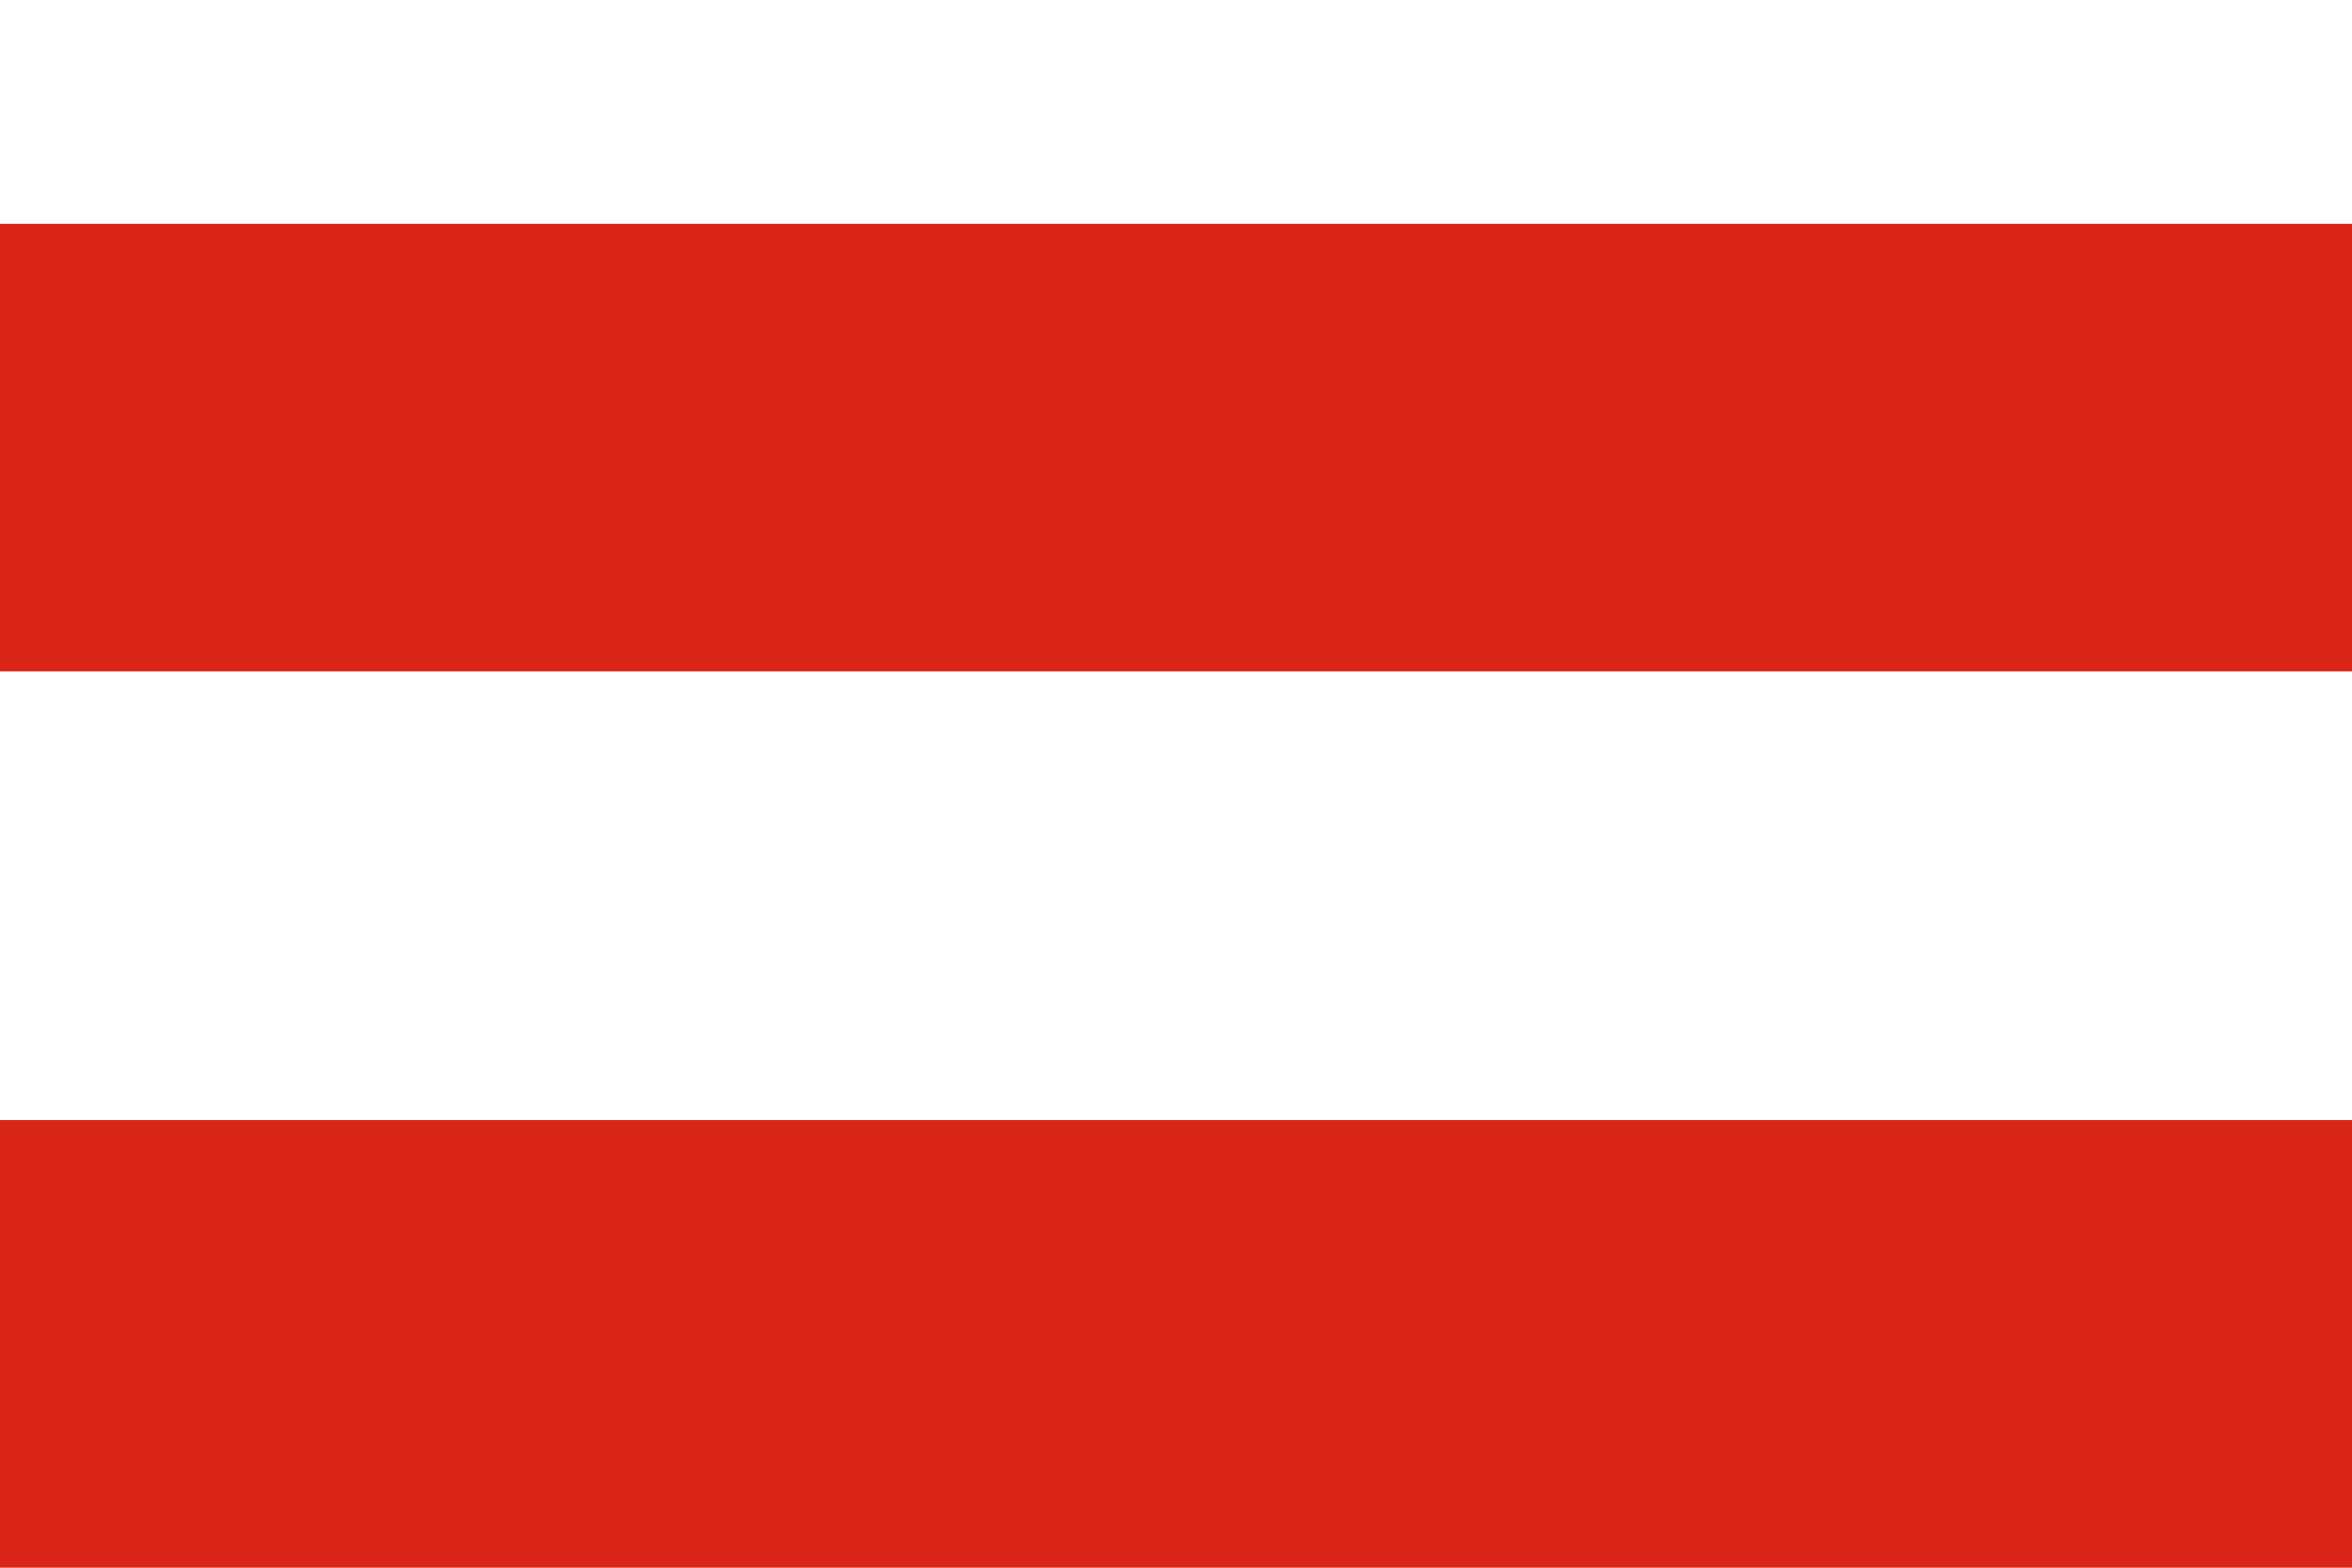 File:Flag of Brno.svg - Wikipedia